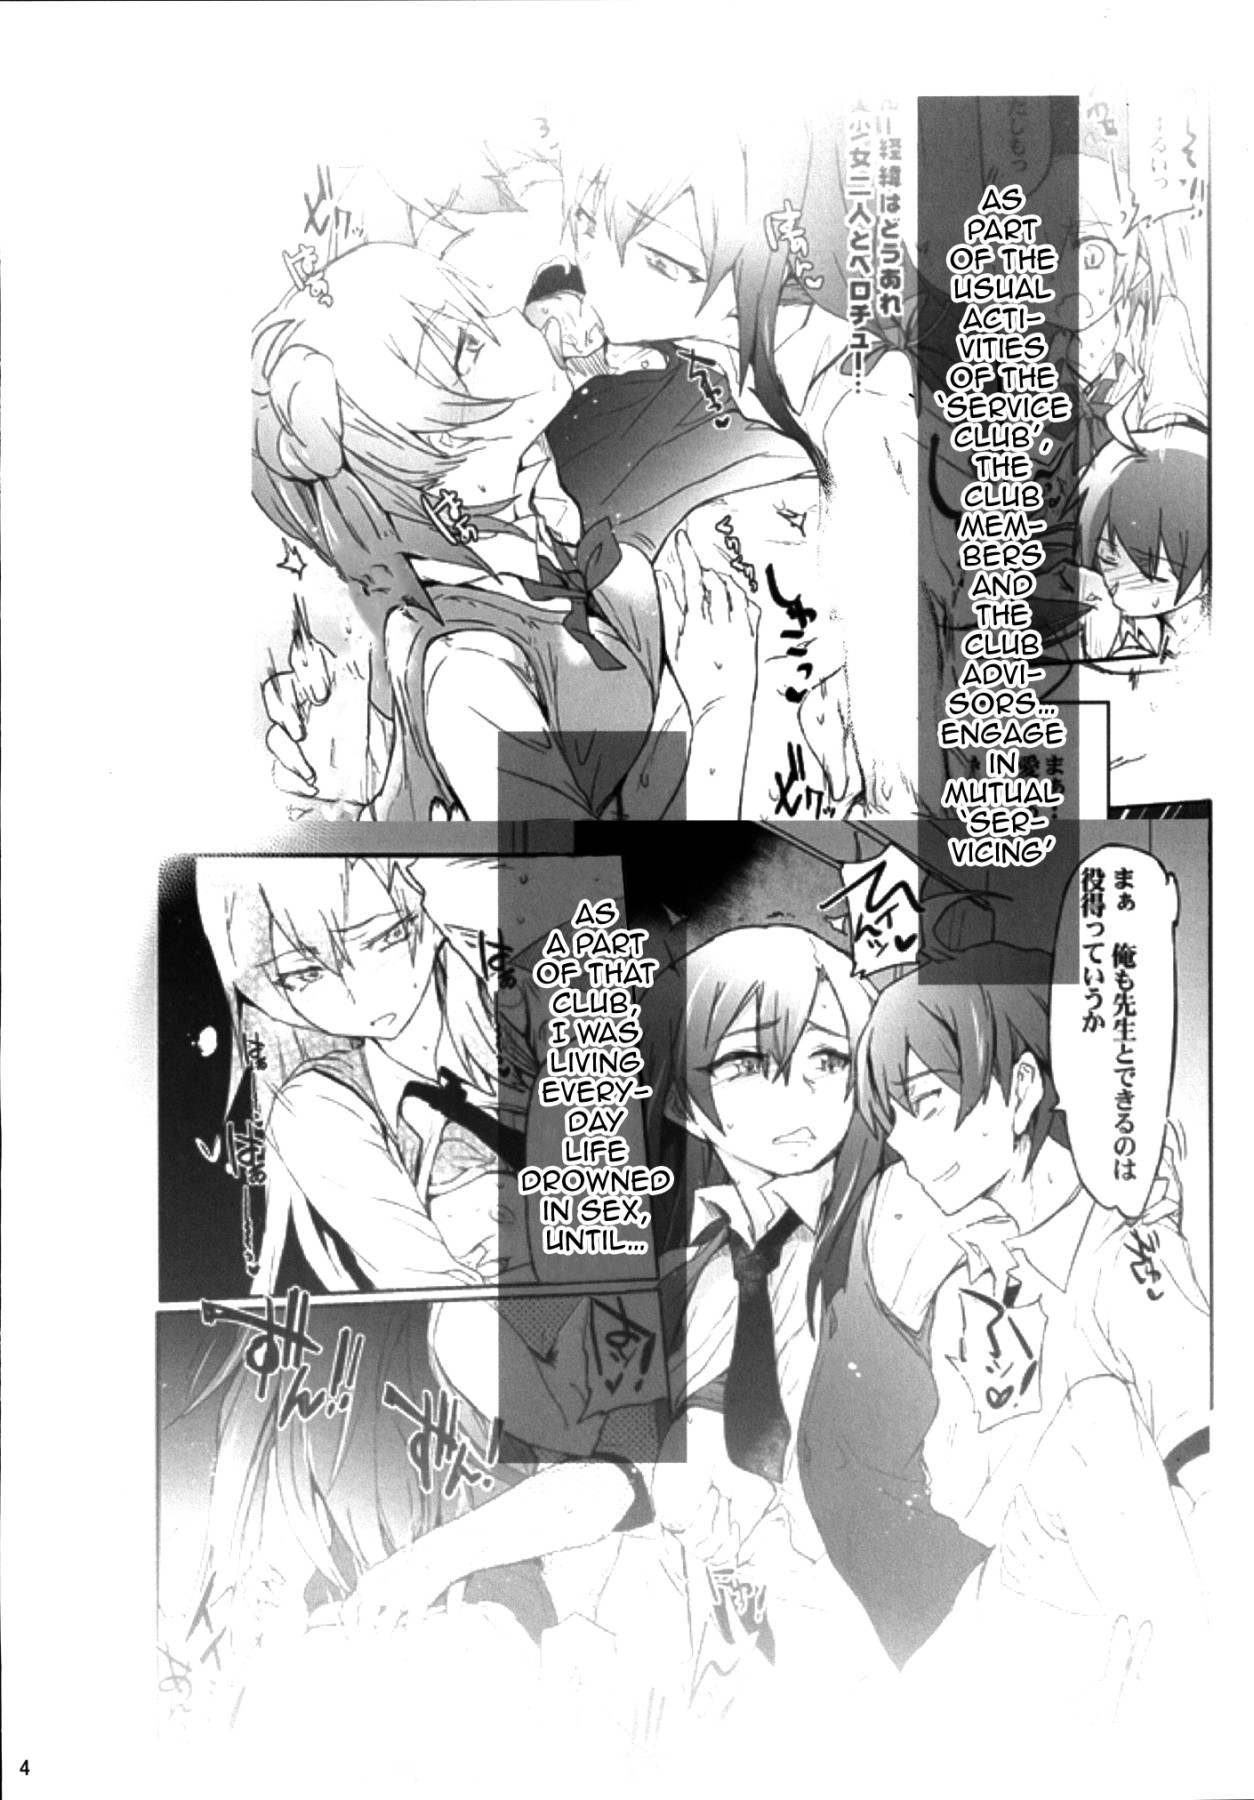 Hentai Manga Comic-The Sexual Activities Of The Volunteer Club-Read-3